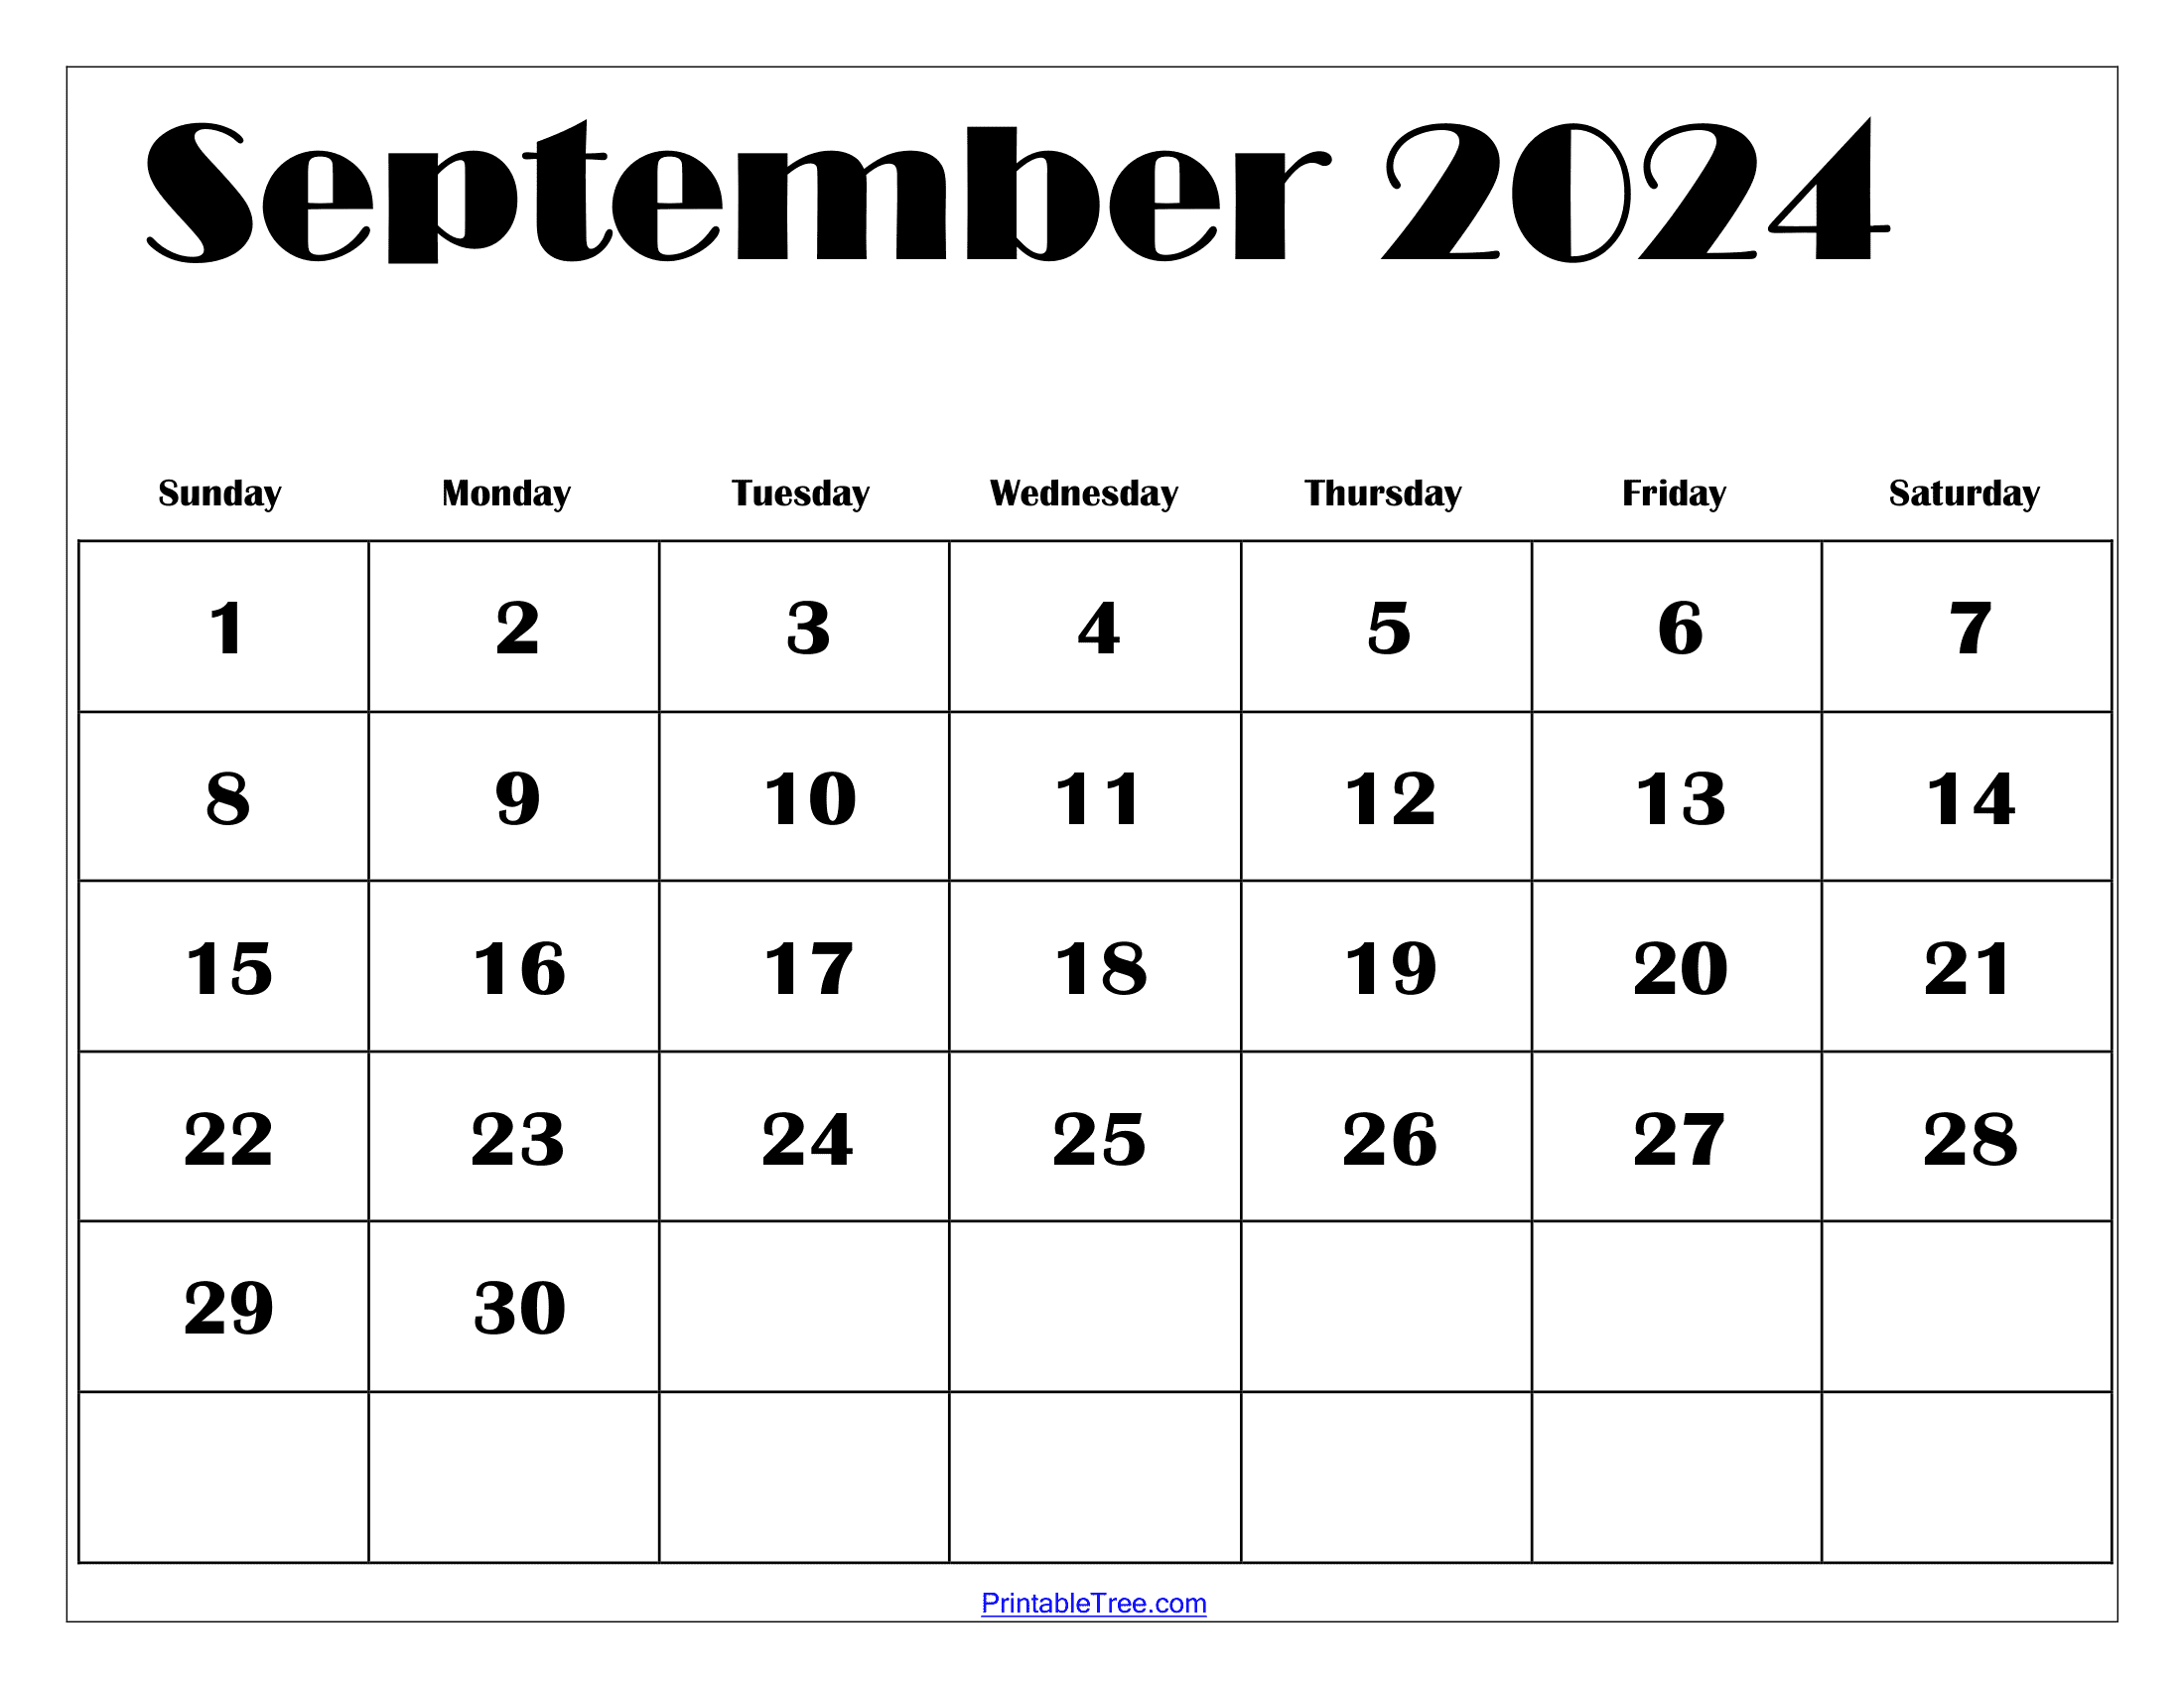 September 2024 Calendar Printable Pdf With Holidays for Printable September 2024 Calendar With Holidays